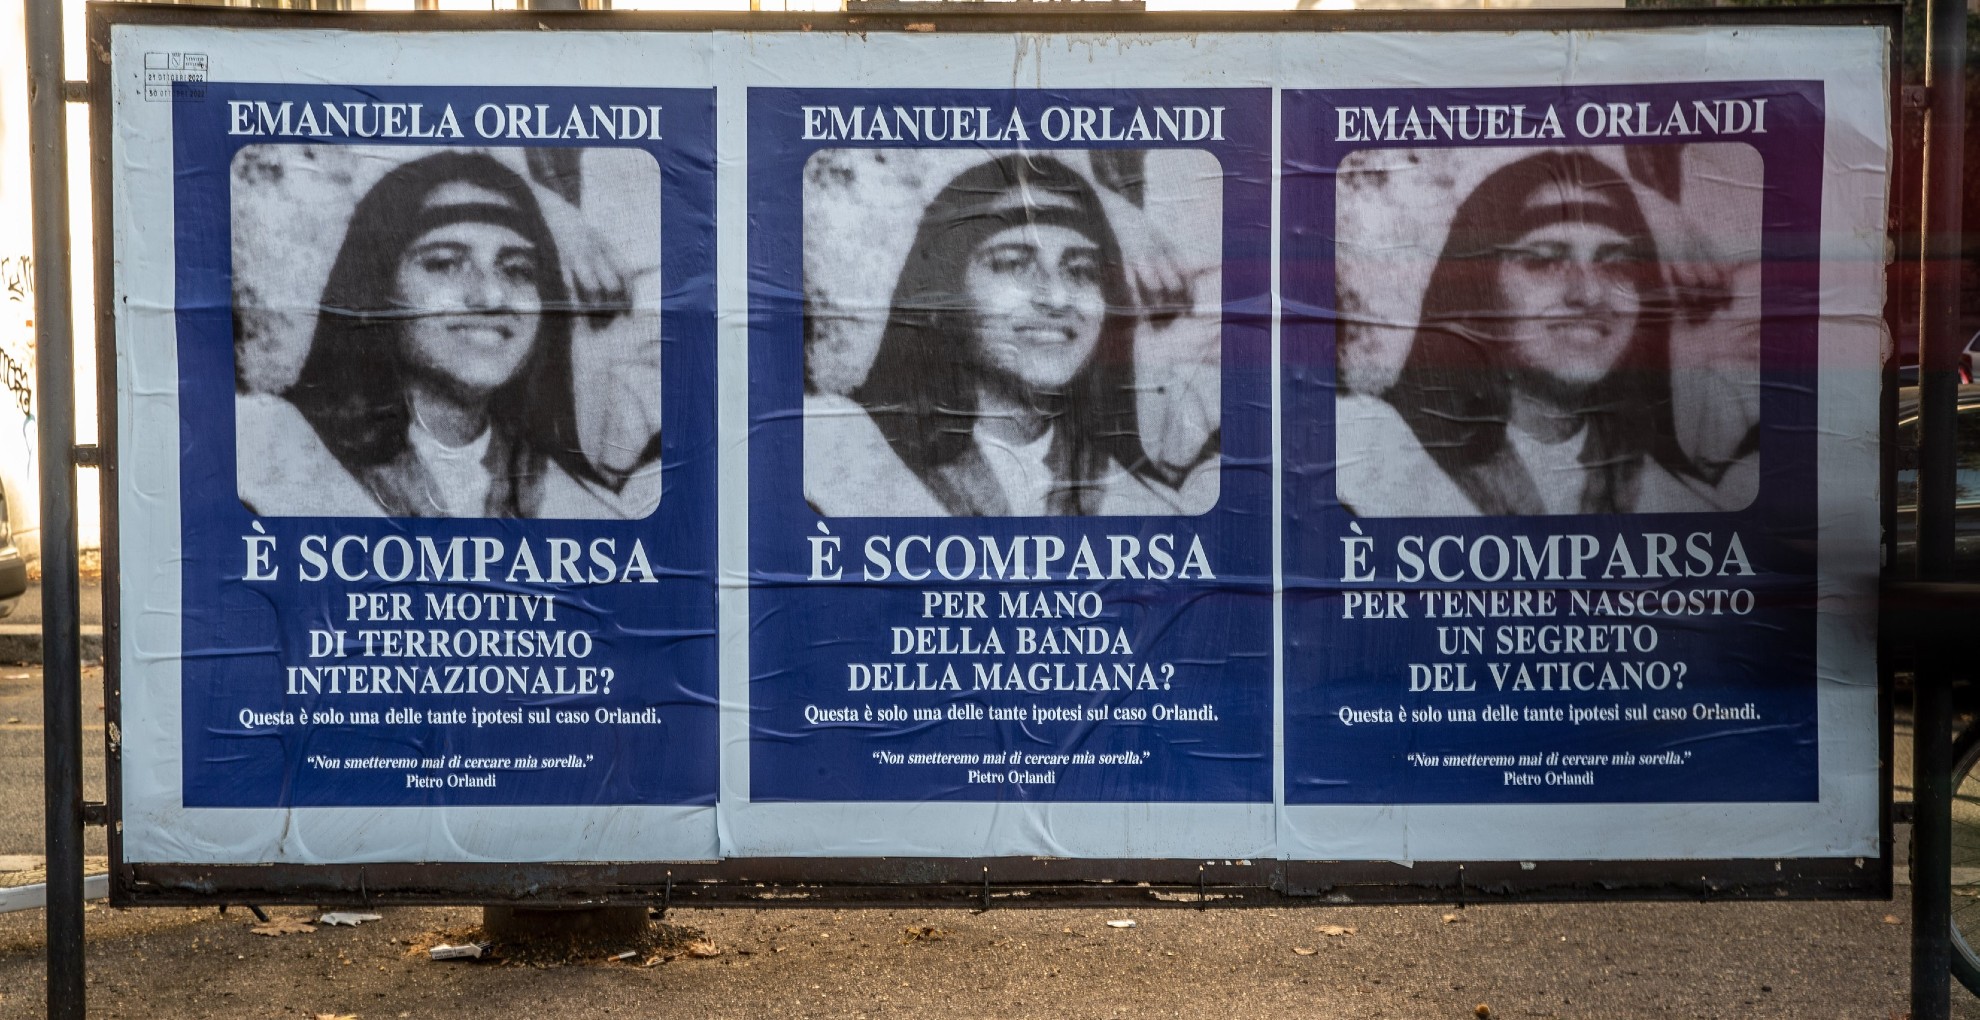 Emanuela Orlandi plakát